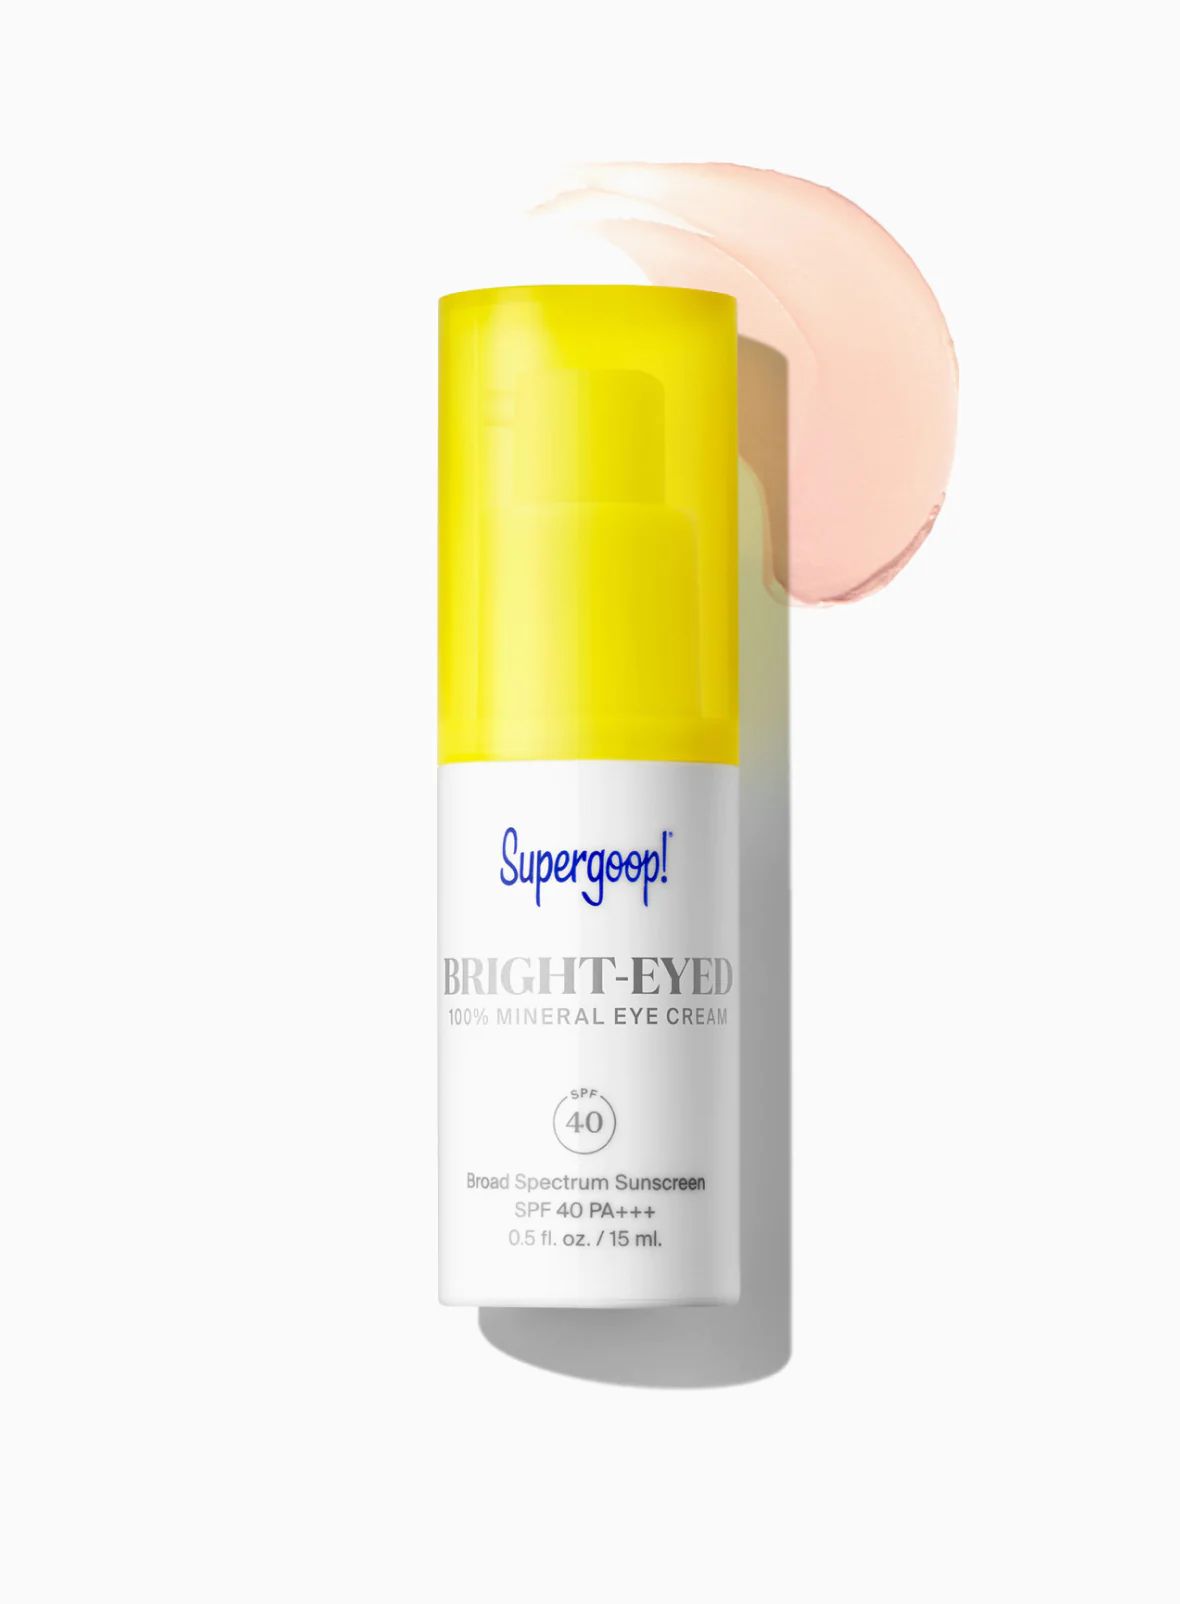 Bright-Eyed 100% Mineral Eye Cream SPF 40 | Supergoop